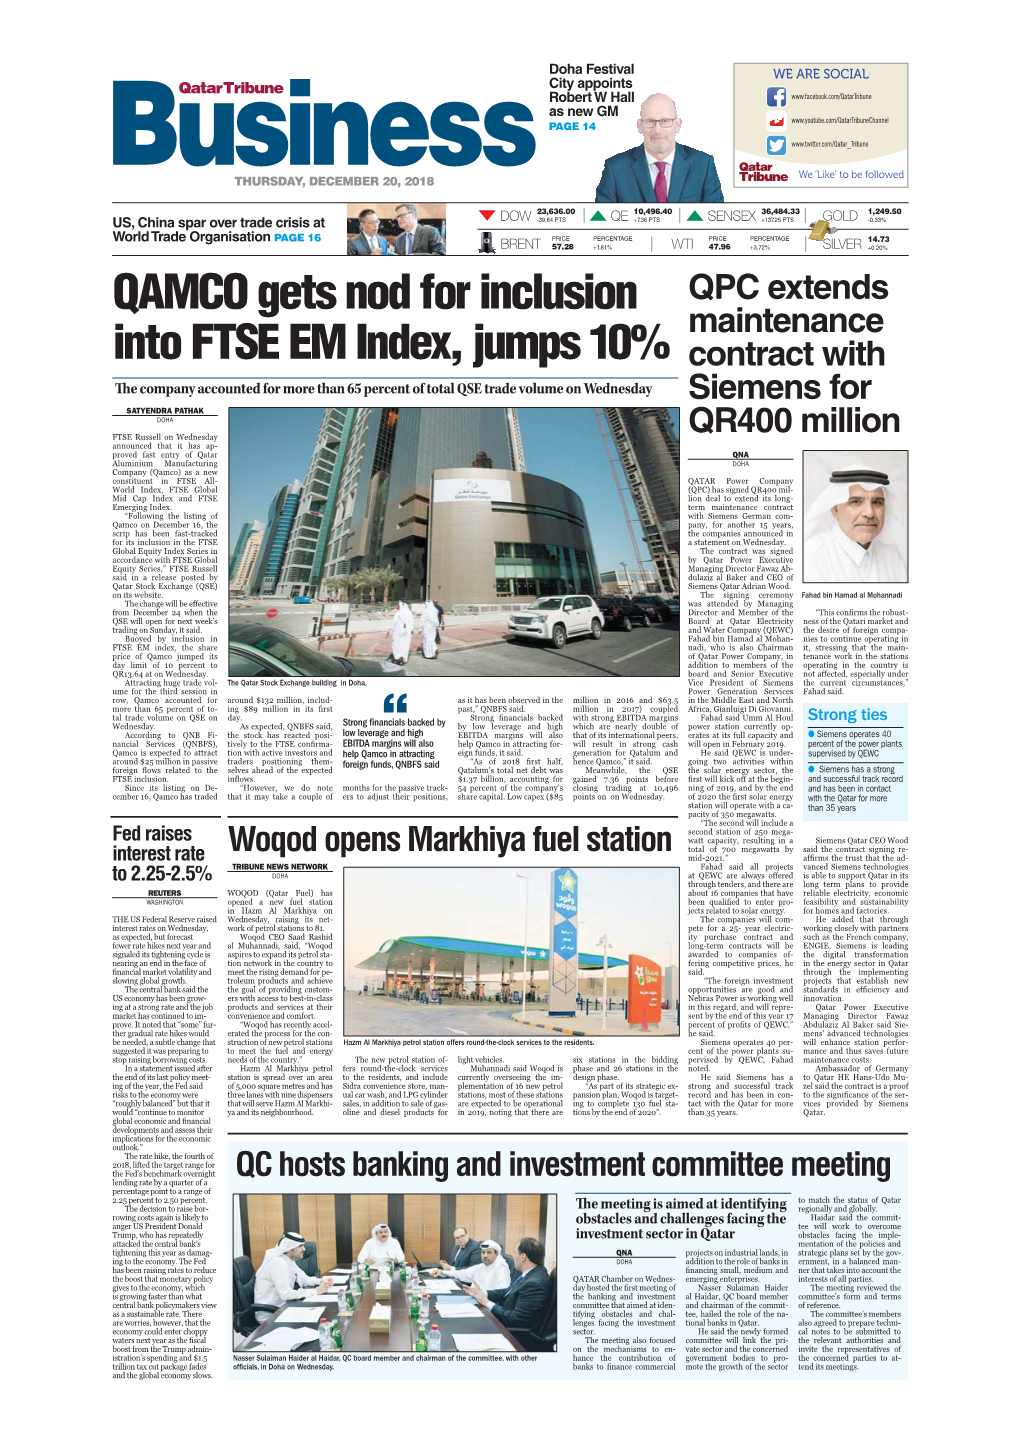 QAMCO Gets Nod for Inclusion Into FTSE EM Index, Jumps